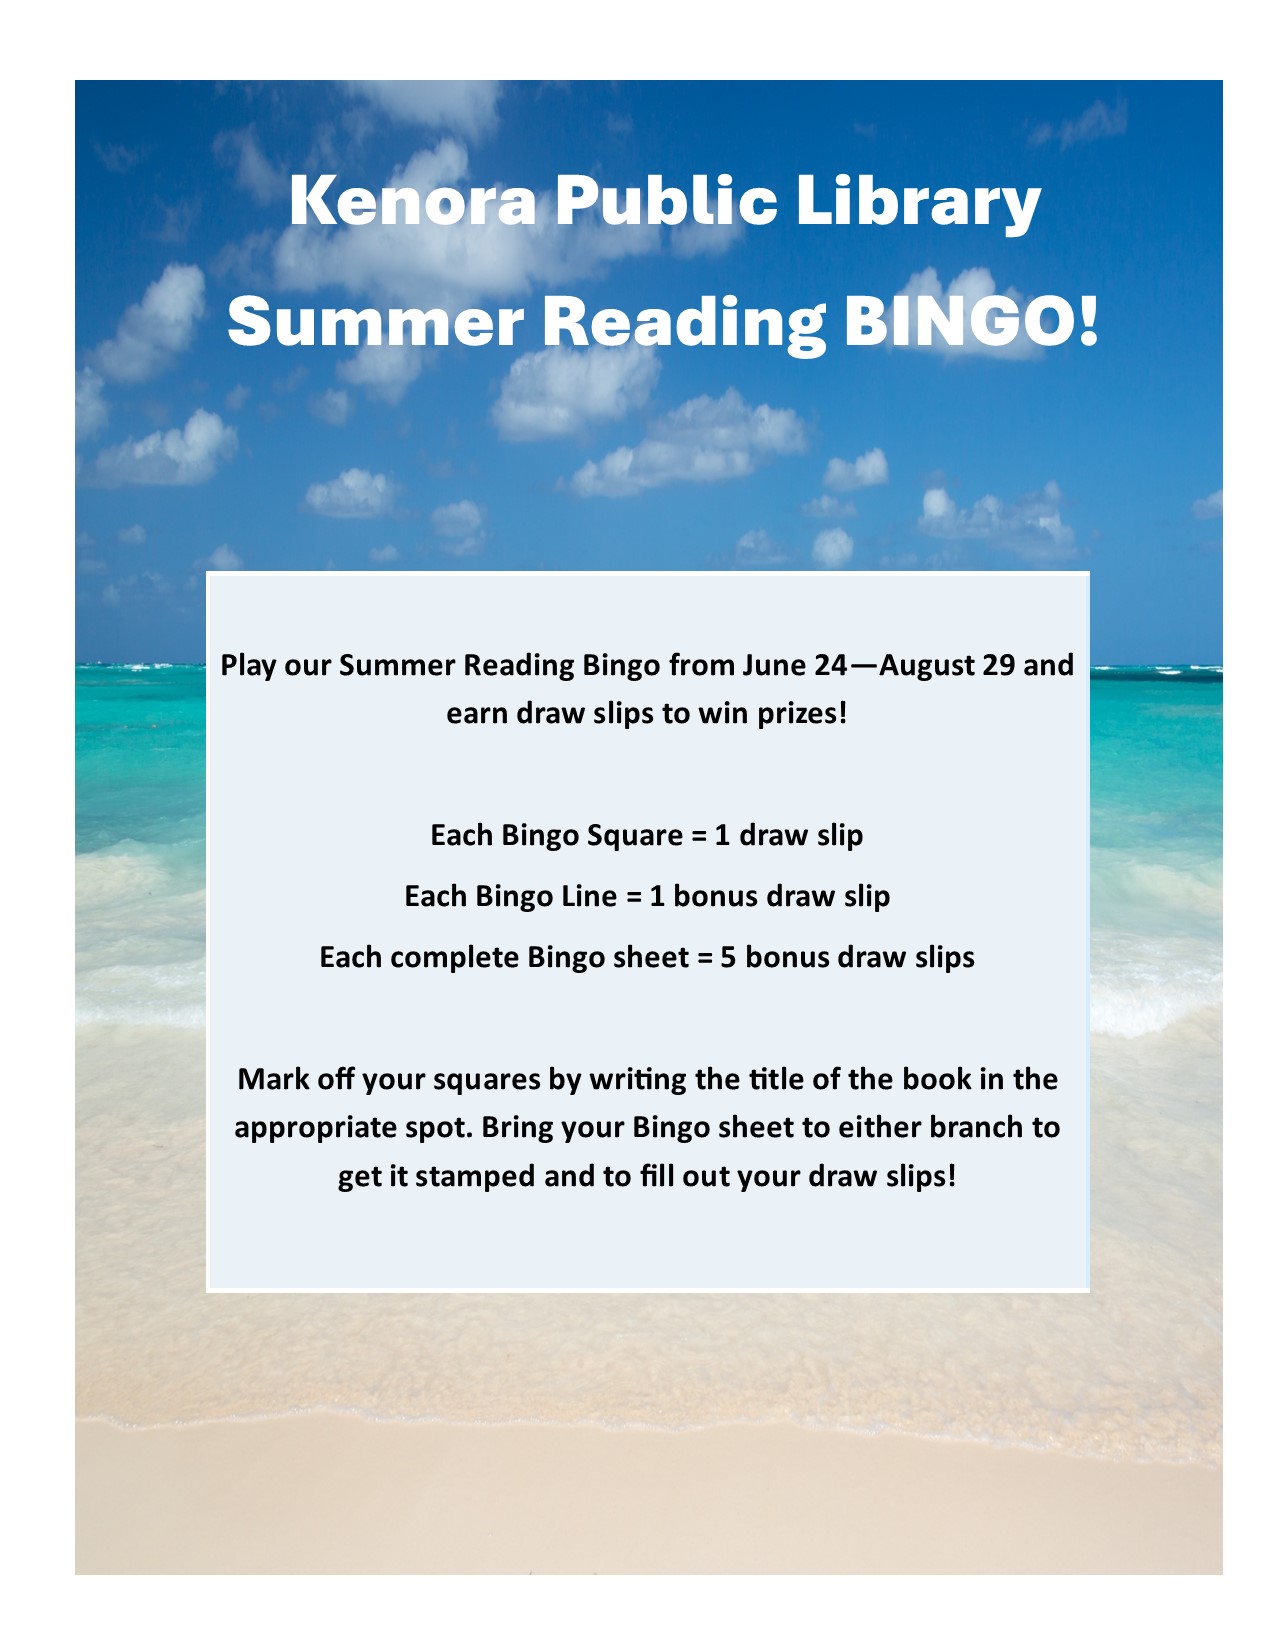 Summer Reading Bingo